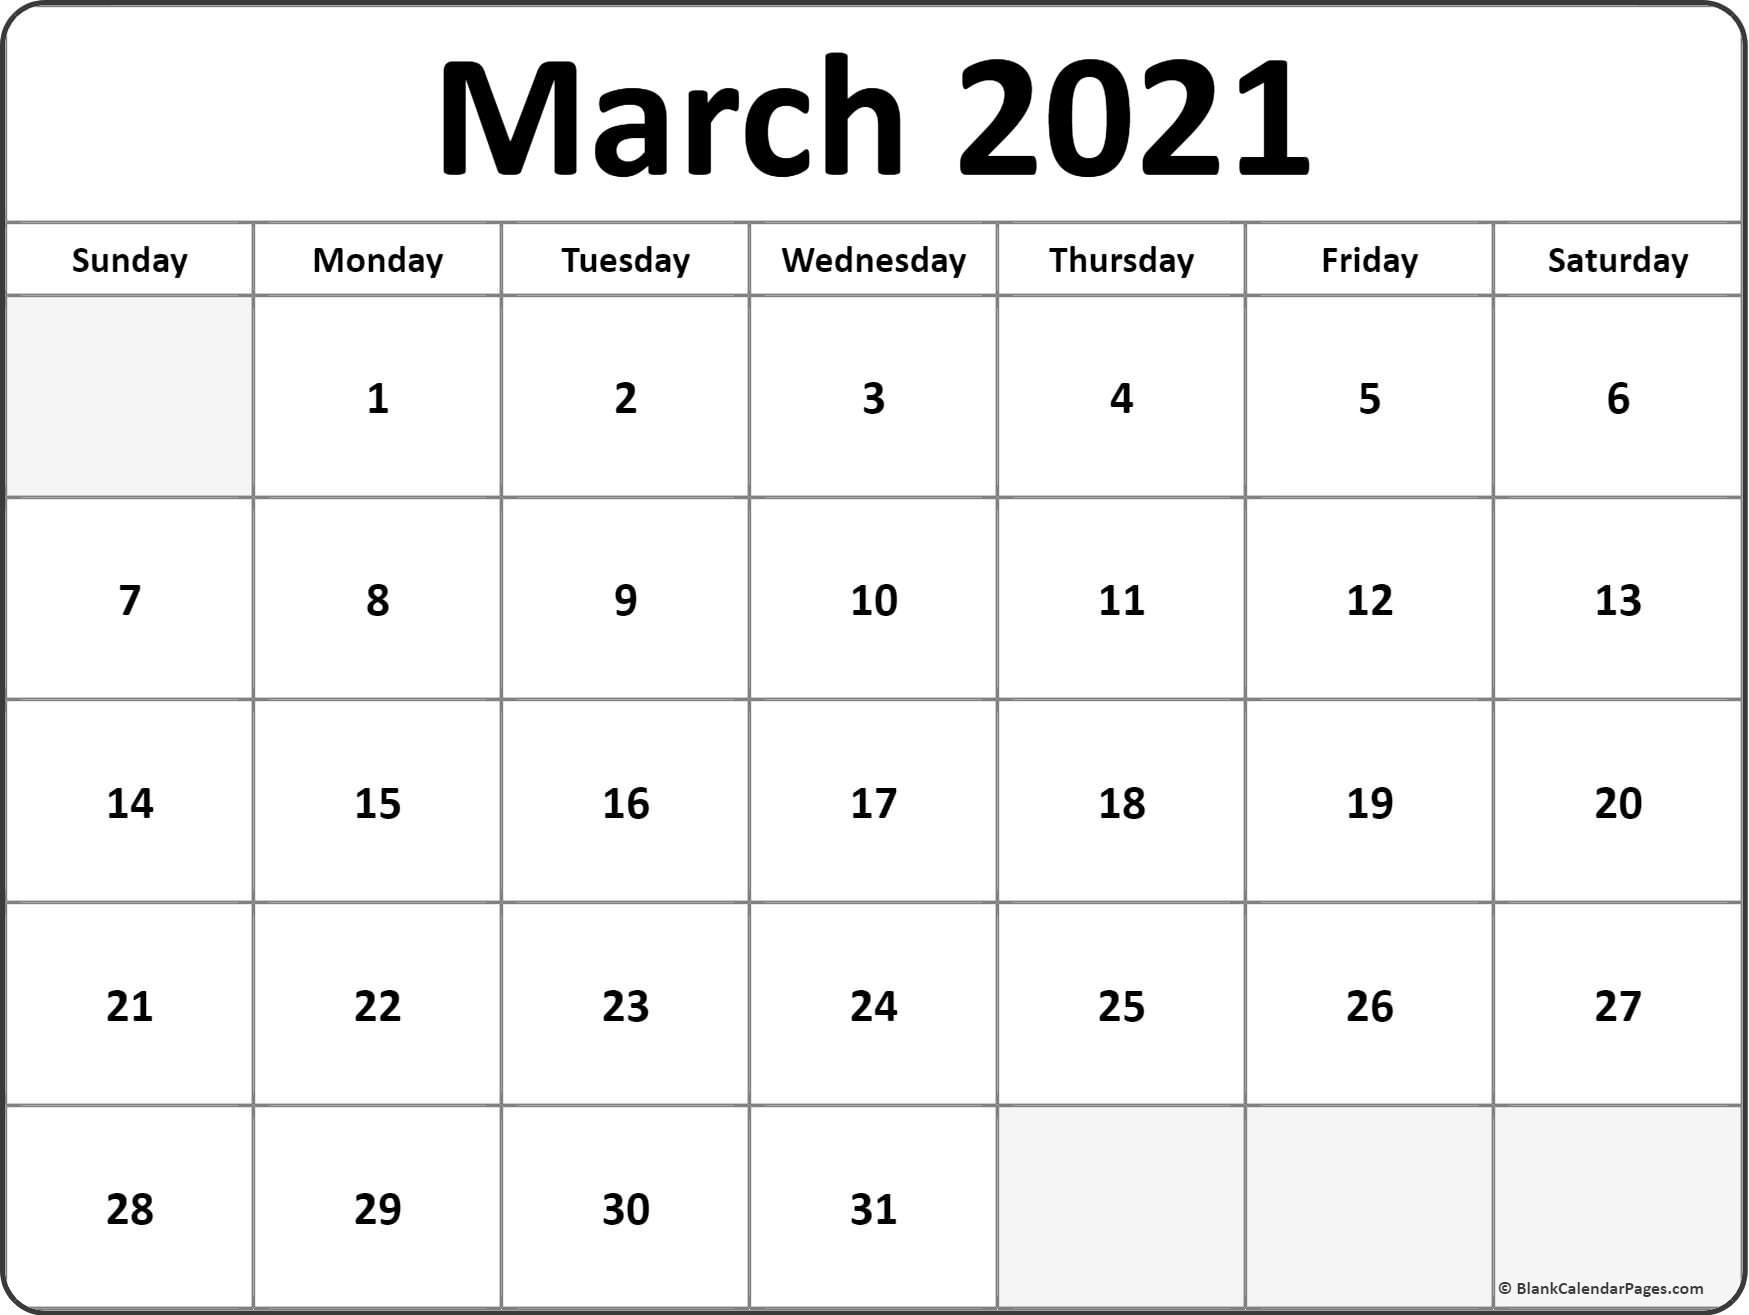 March 2021 Blank Calendar Collection.